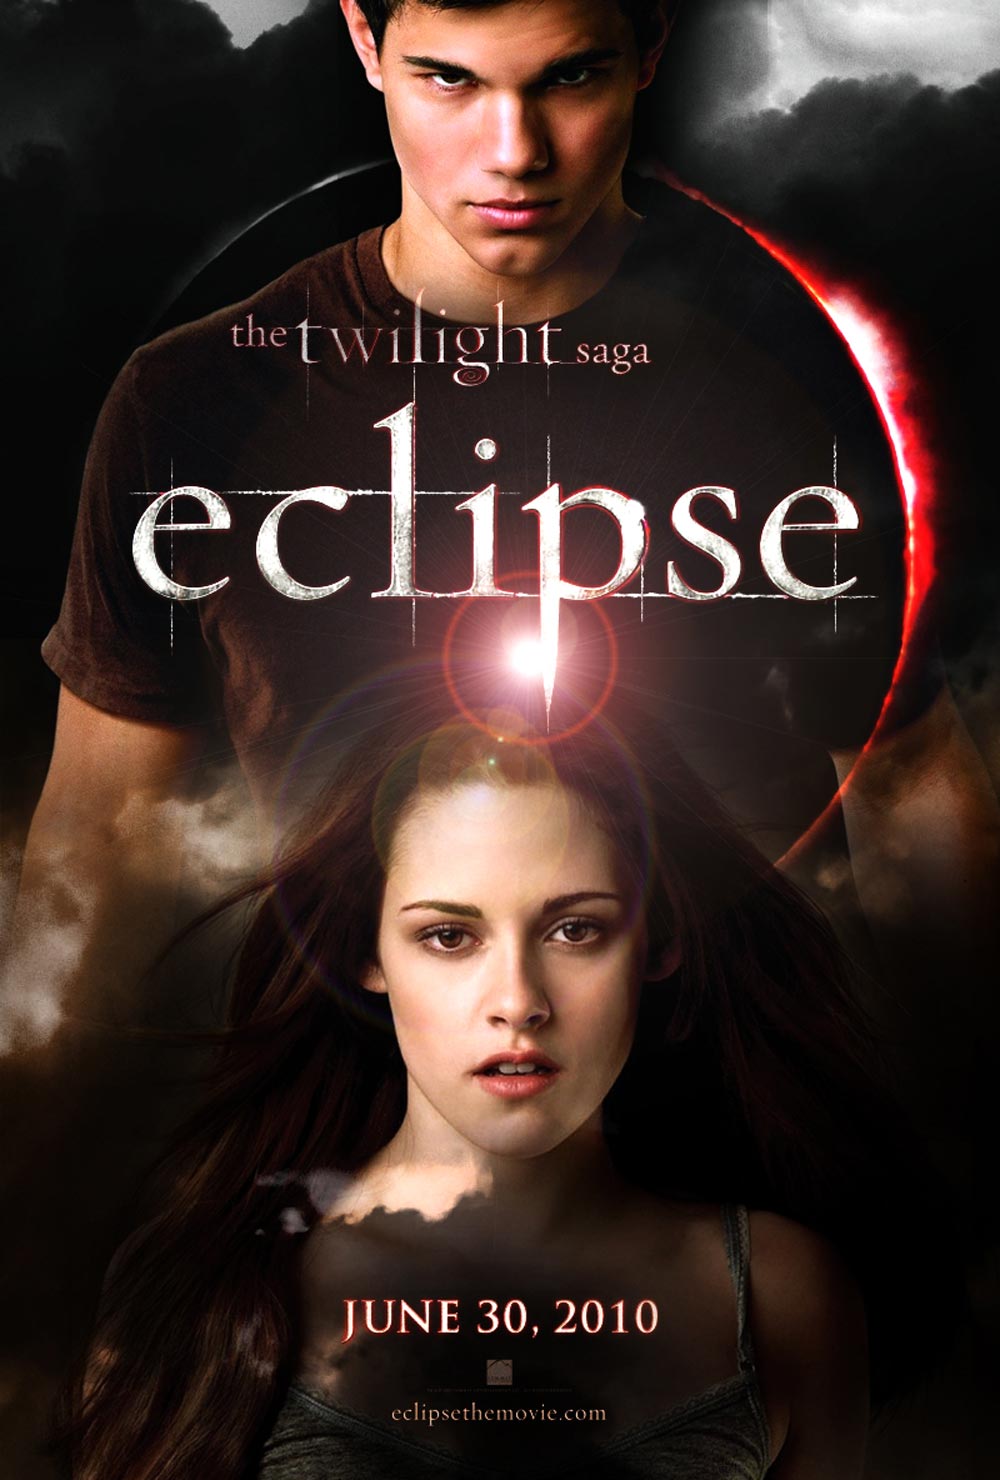 Roger Qbert Reviews “The Twilight Saga Eclipse” Review St. Louis